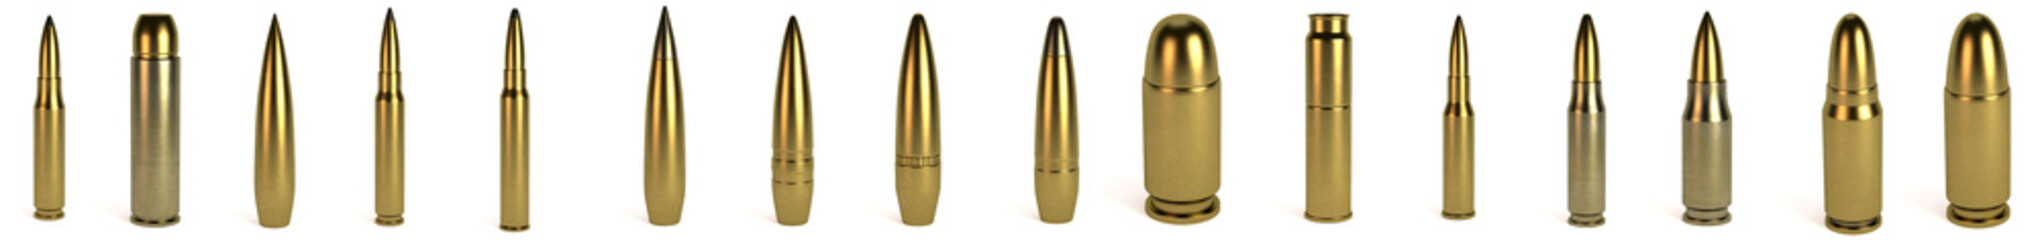 realistic 3d render of bullets